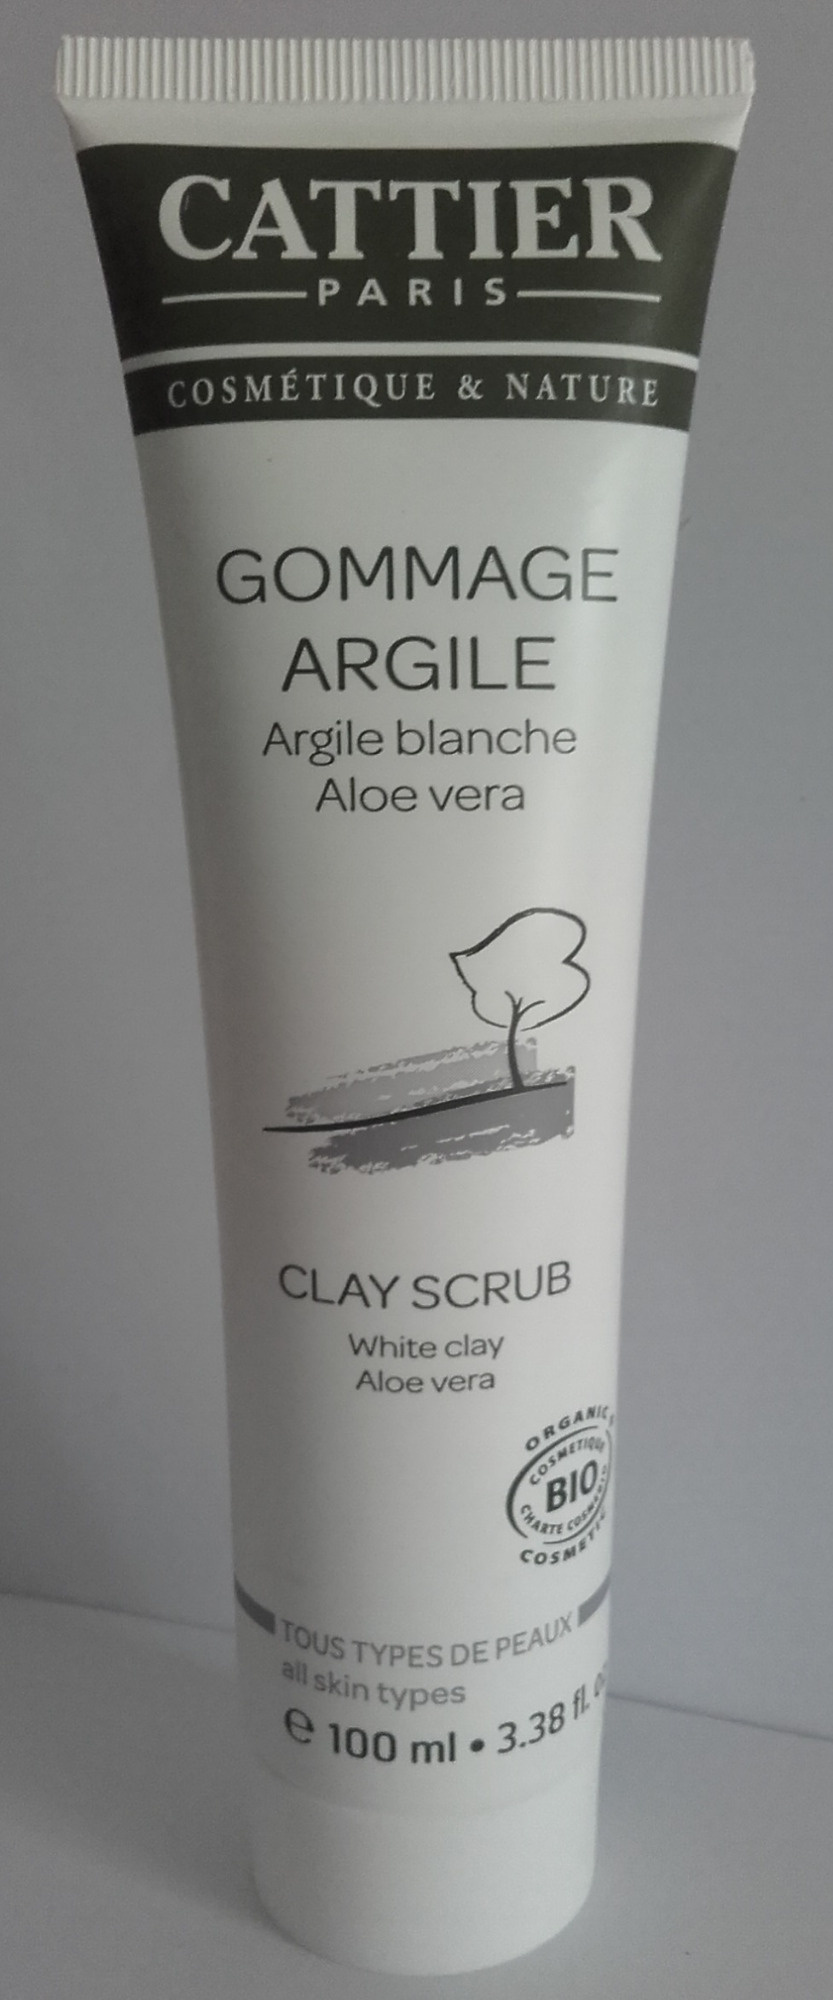 Gommage Argile - Argile blanche Aloe Vera - Produto - fr